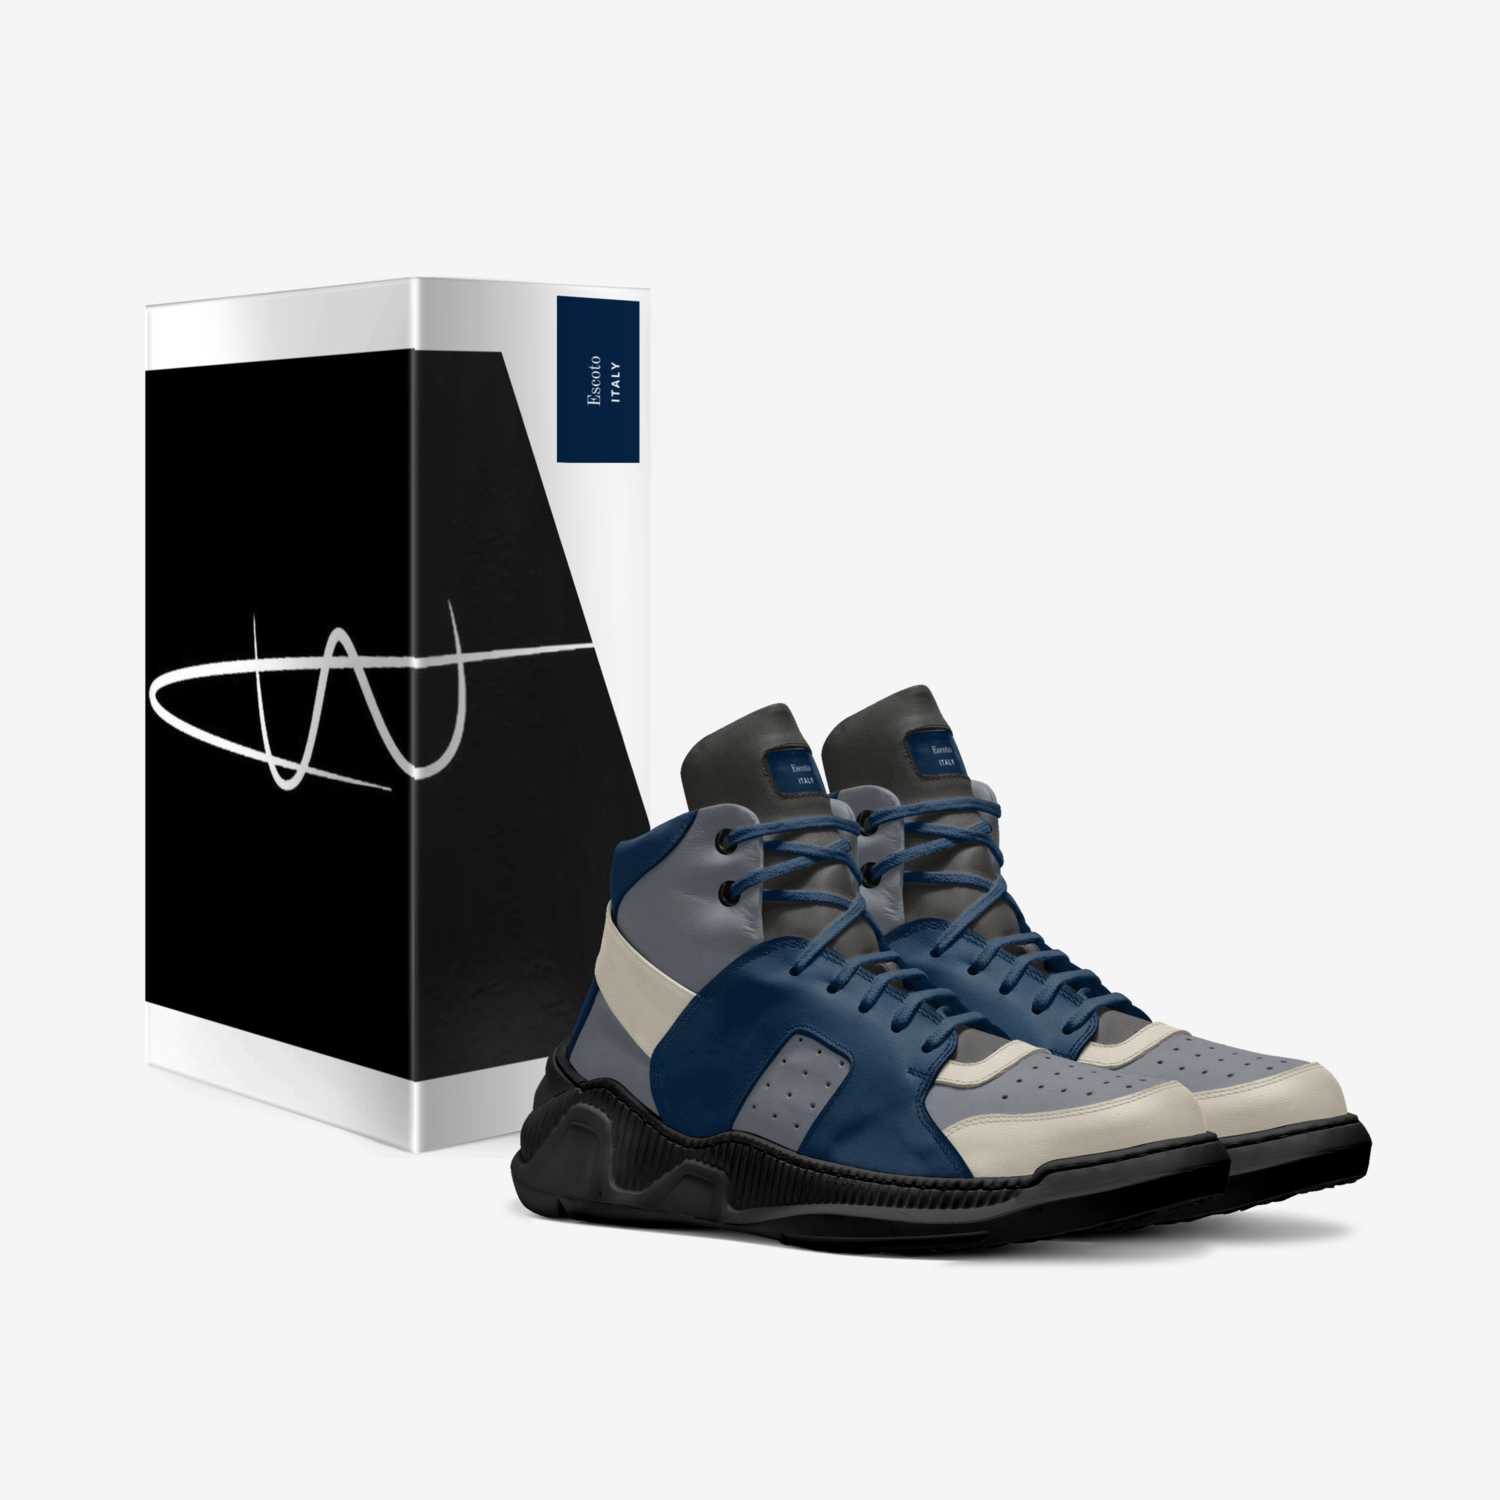 Escoto custom made in Italy shoes by Adrian Escoto | Box view